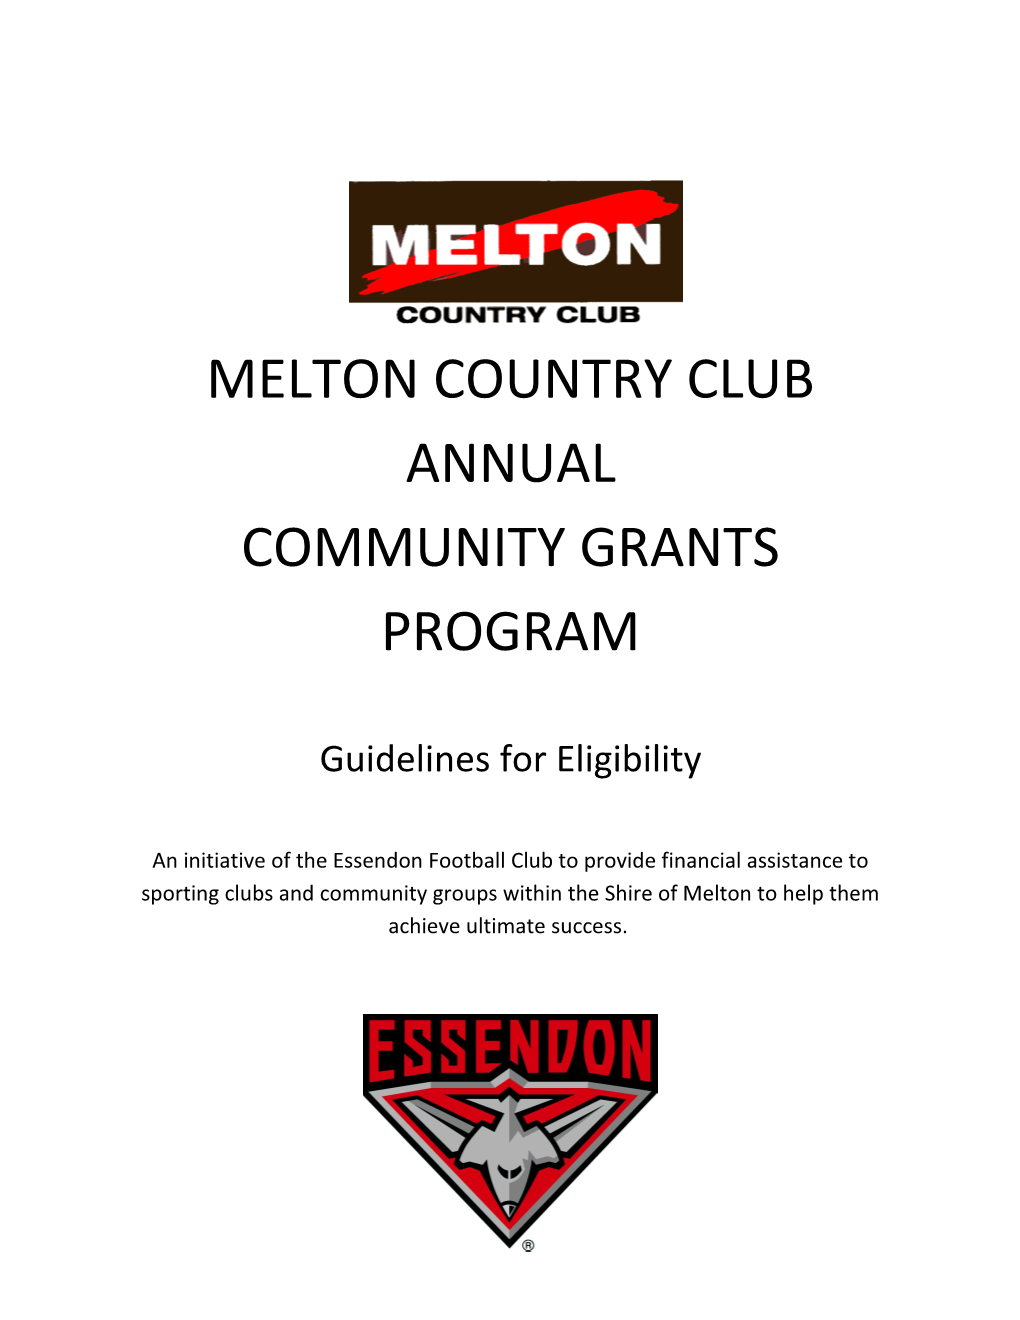 Melton Country Club